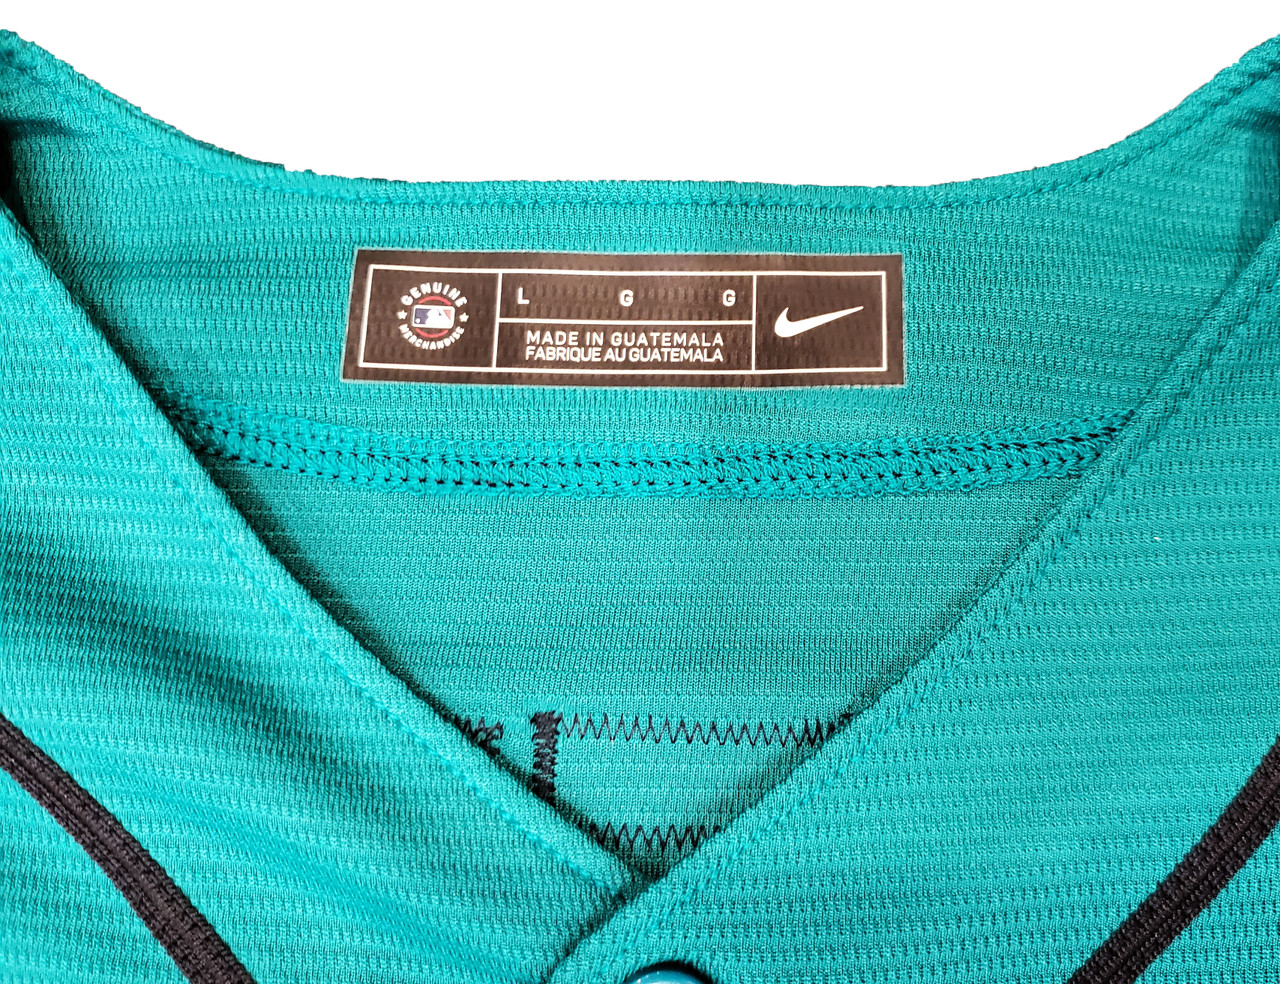 Ken Griffey Jr. Seattle Mariners Signed Authentic Nike Teal Jersey BAS –  Diamond Legends Online